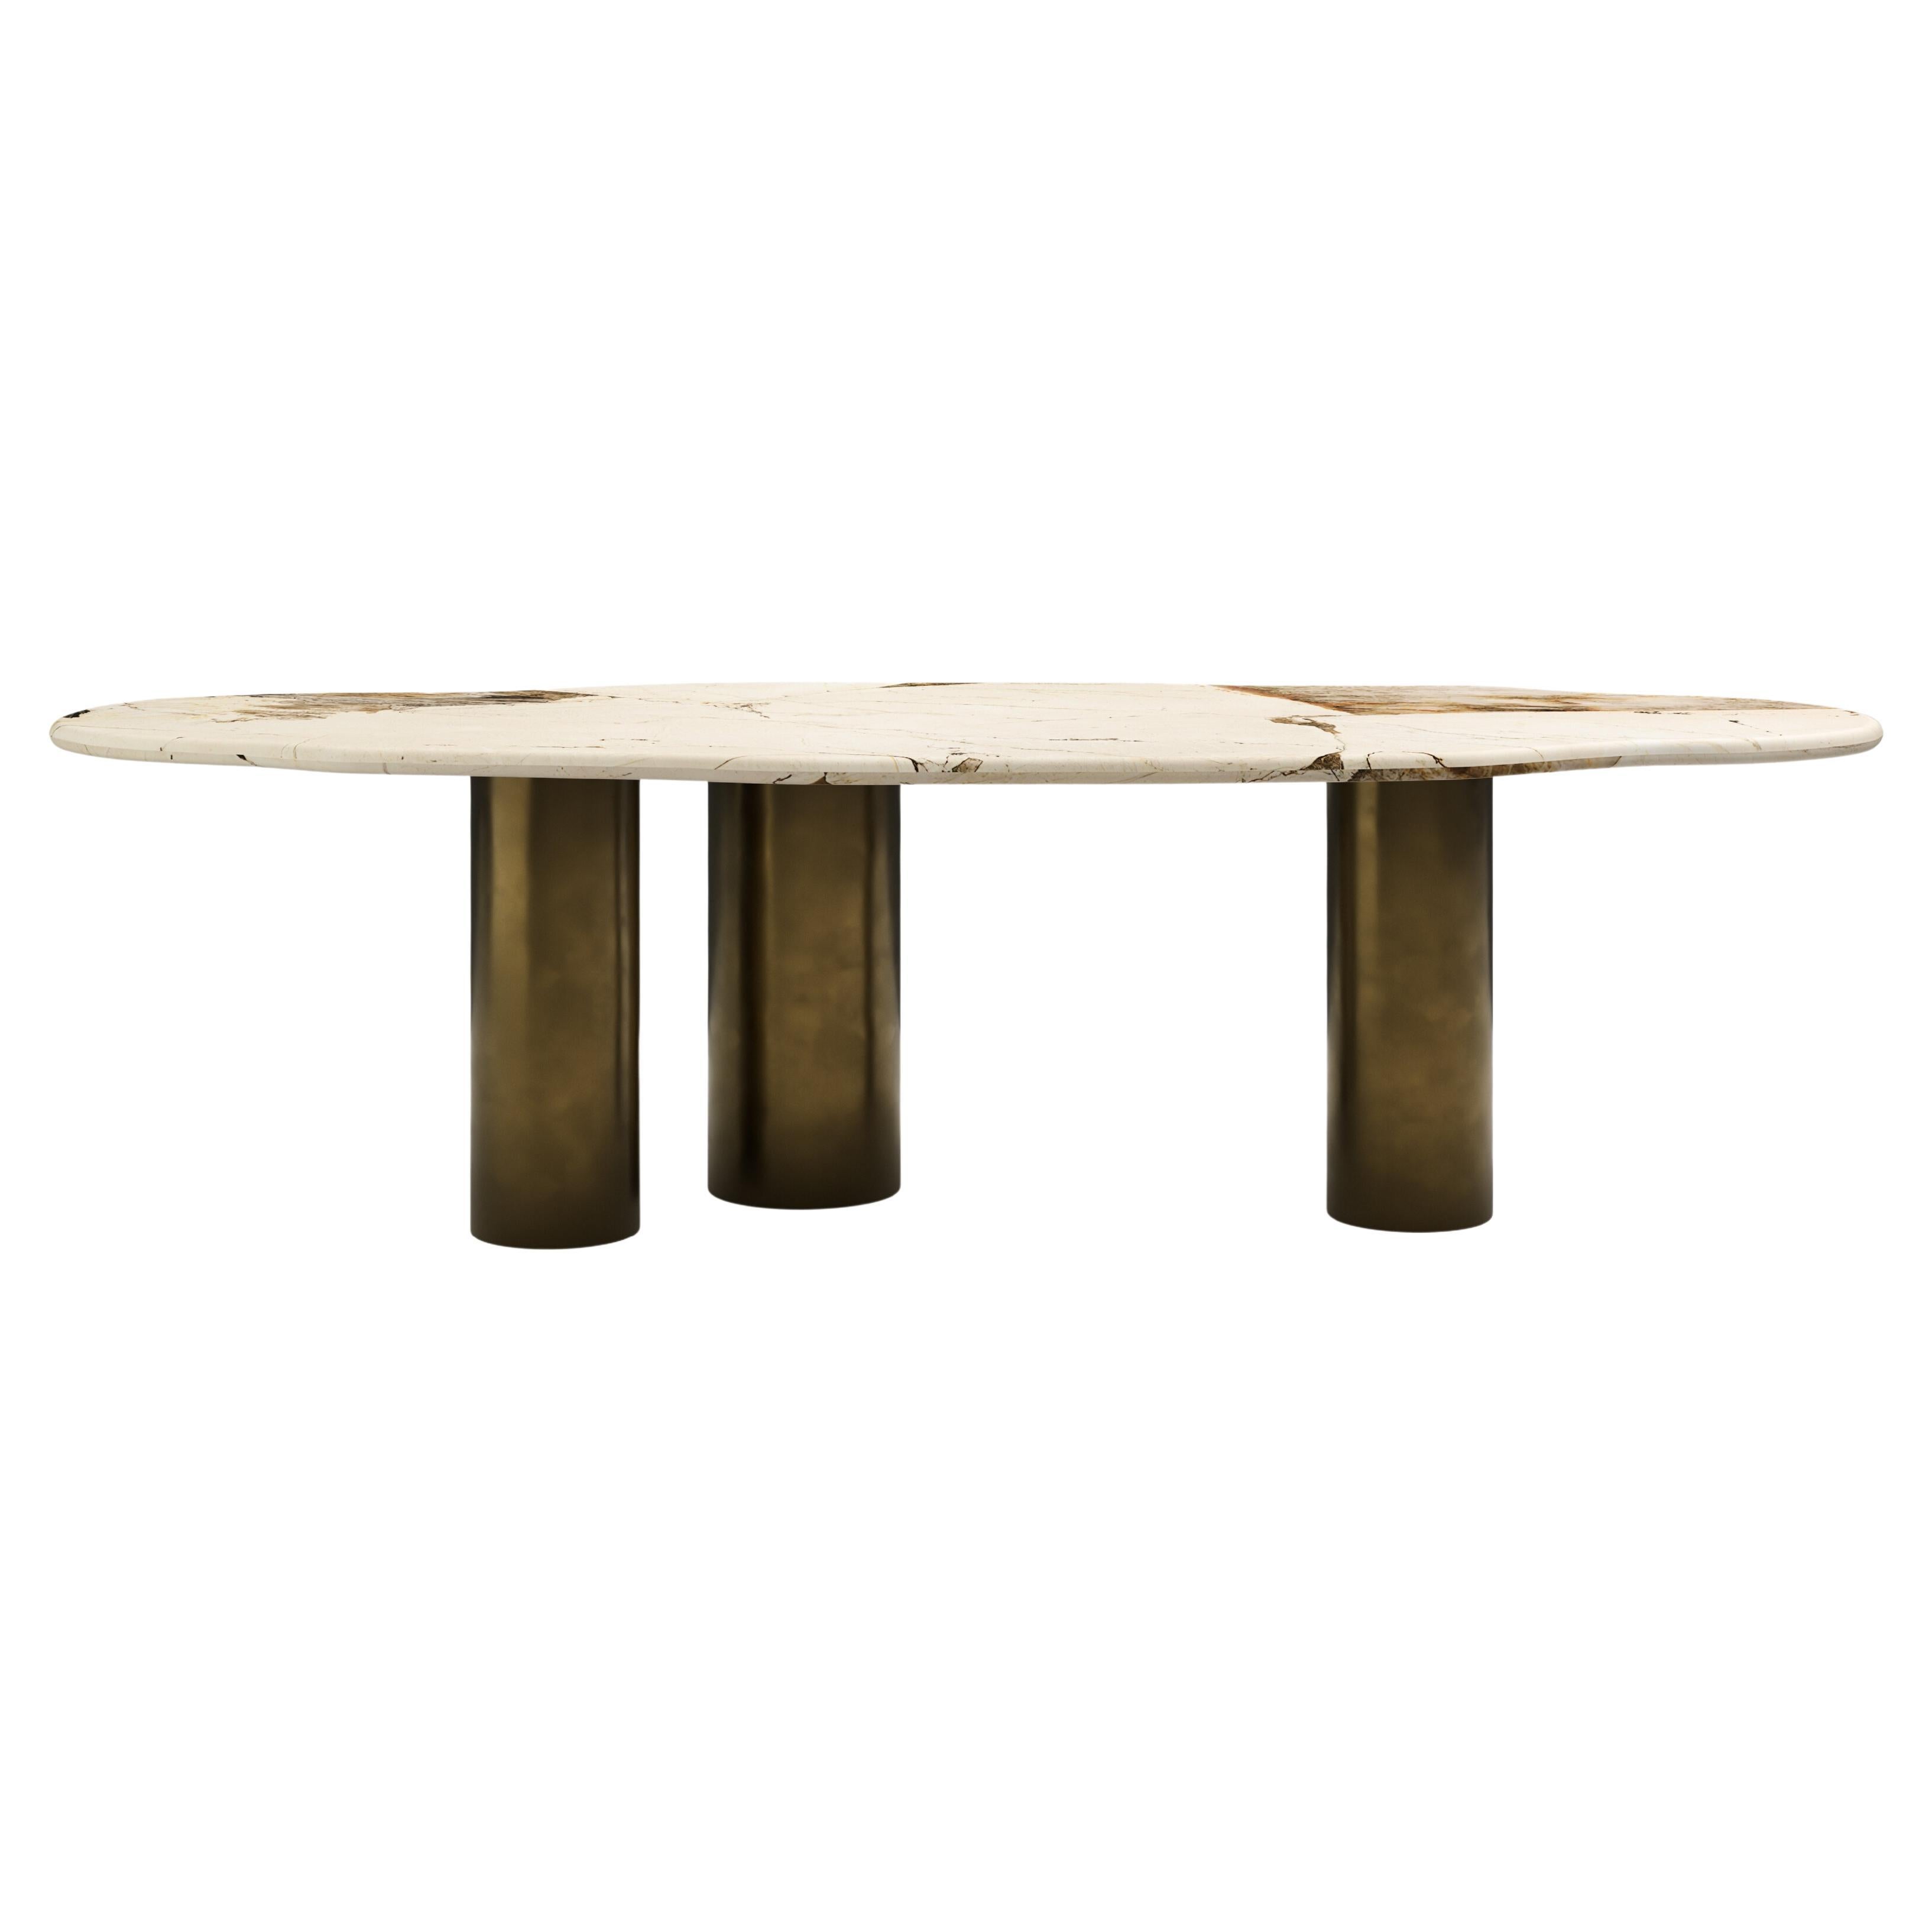 FORM(LA) Lago Freeform Dining Table 108”L x 48”W x 30”H Quartzite & Bronze For Sale